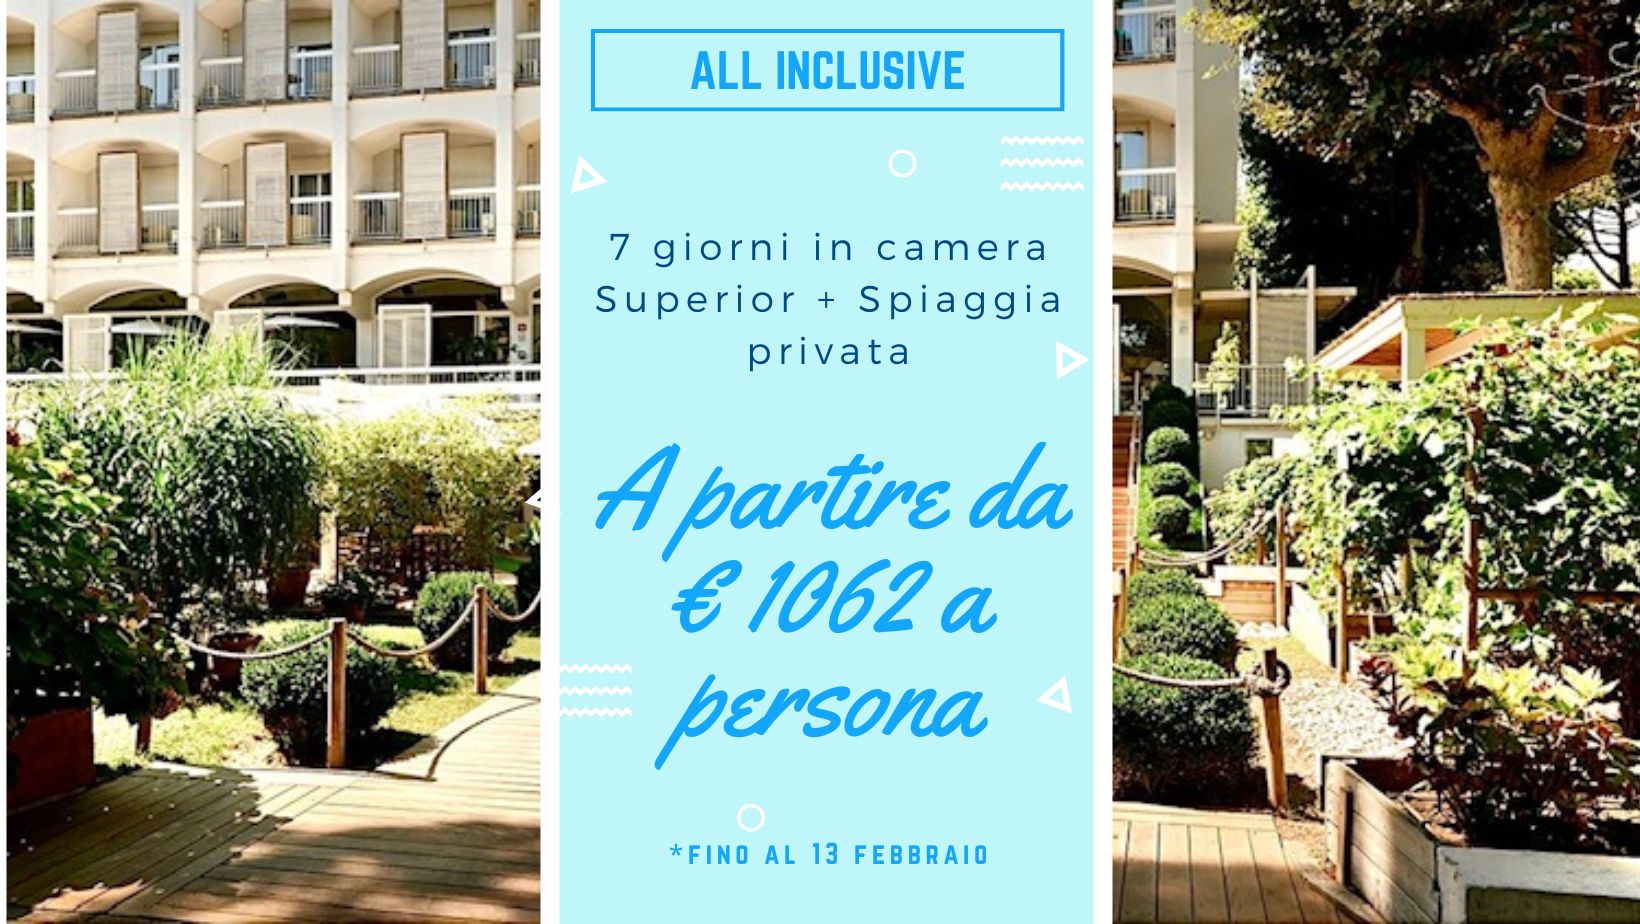 Hotel Saraceno 4 stelle milano marittima luxury deal advanced booking 8%